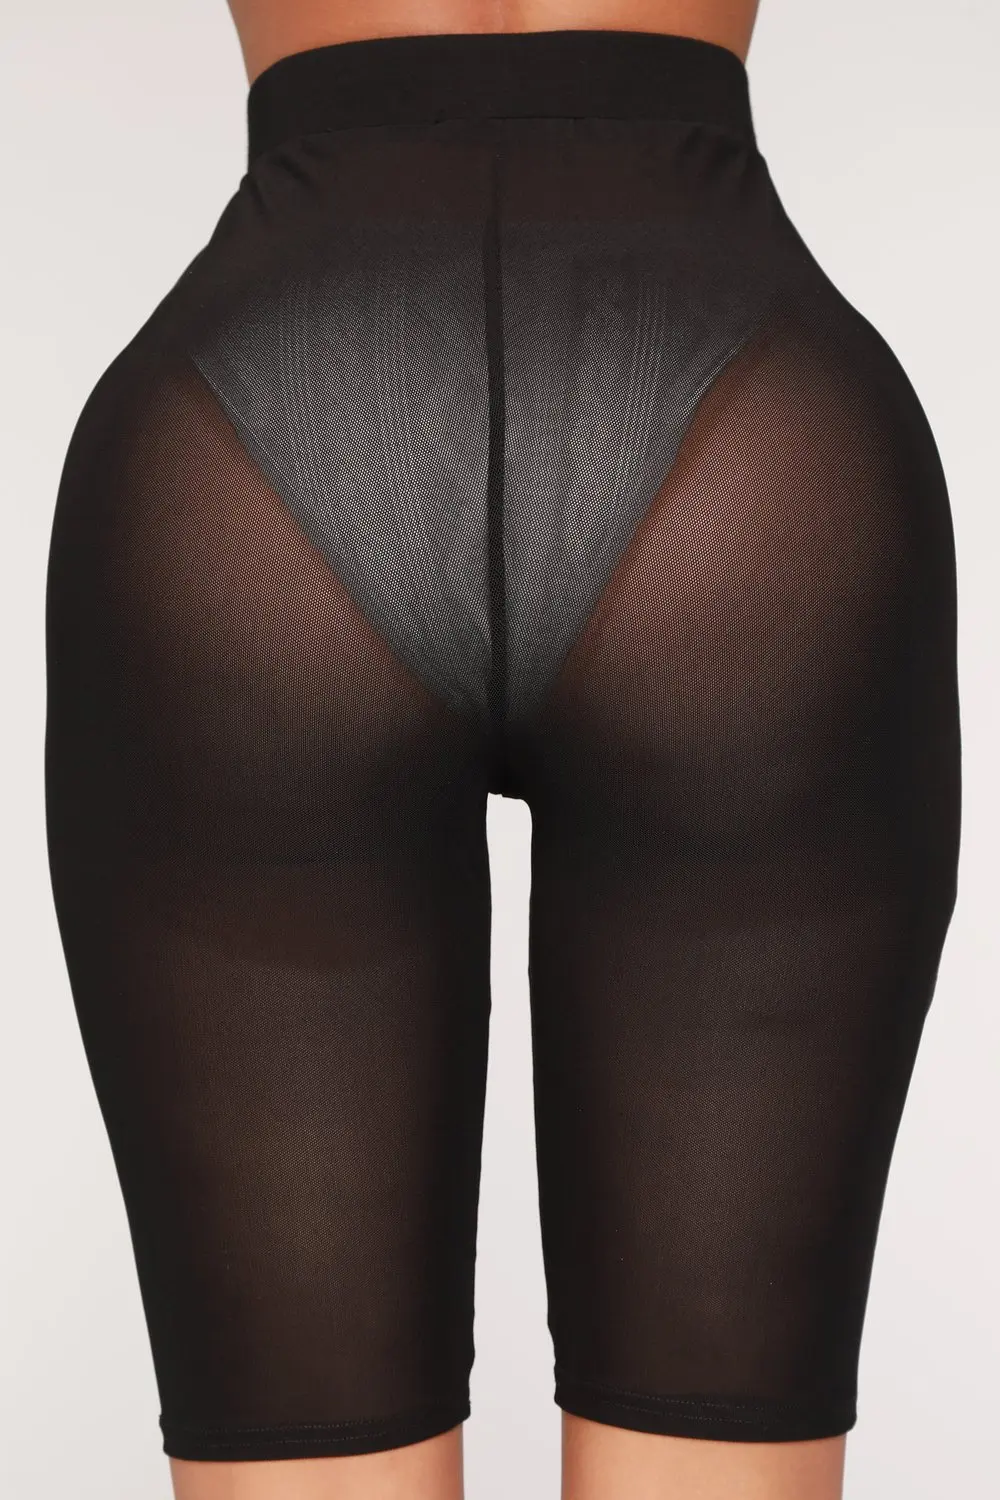 Новый 2019 Moda de malla transparente пикантные mujeres pantalones, casuales para mujer Pantalones, de cintura alta pantal